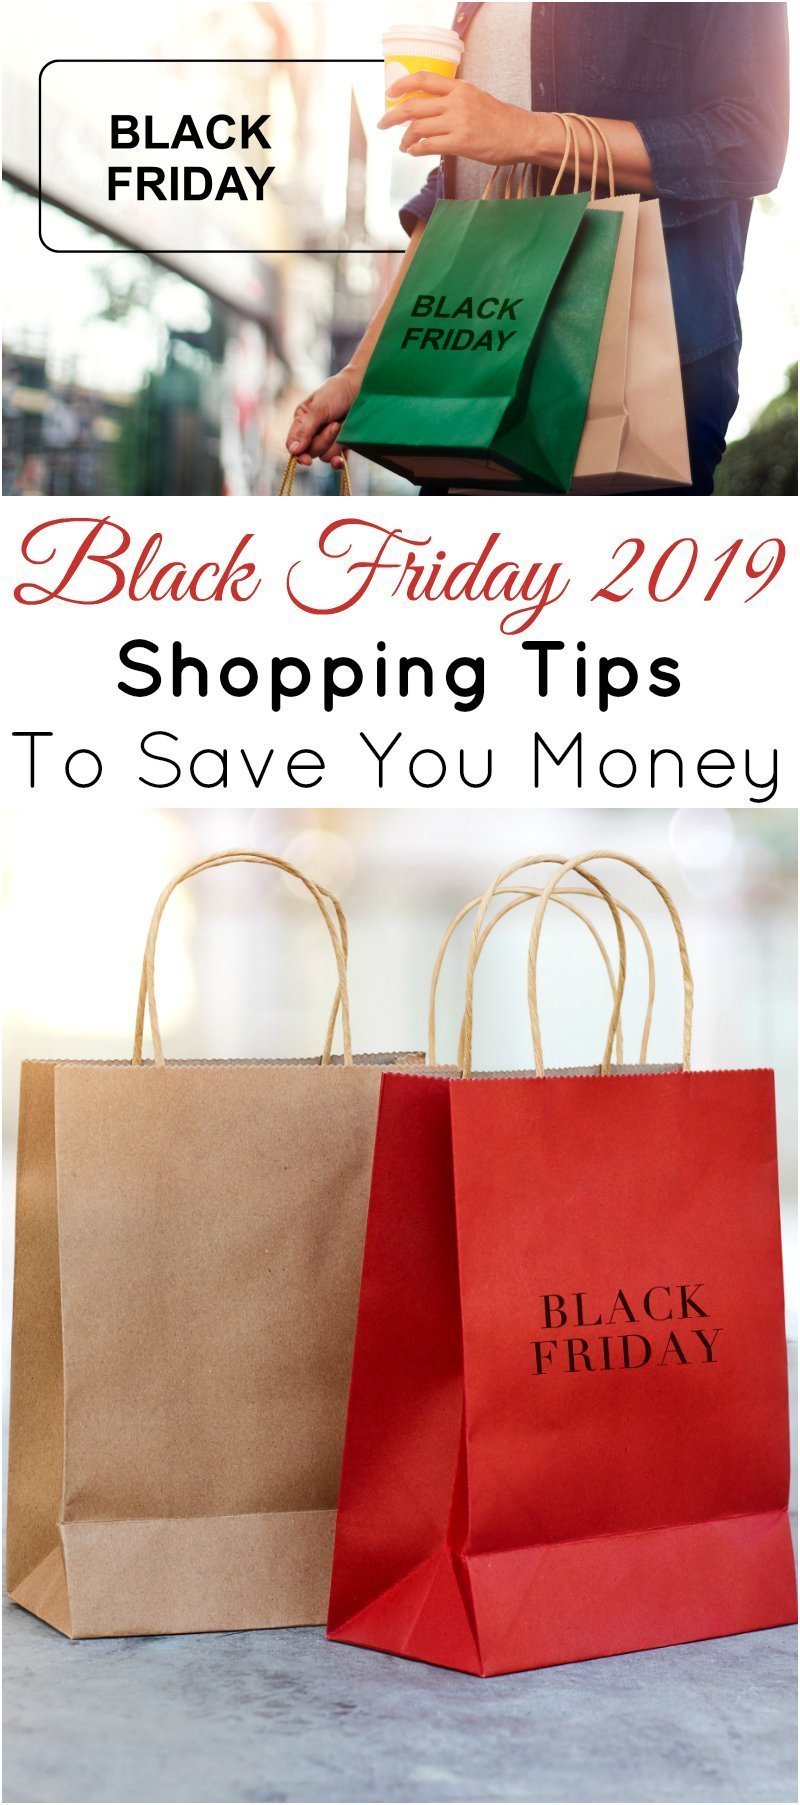 Black Friday 2019 Shopping Tips